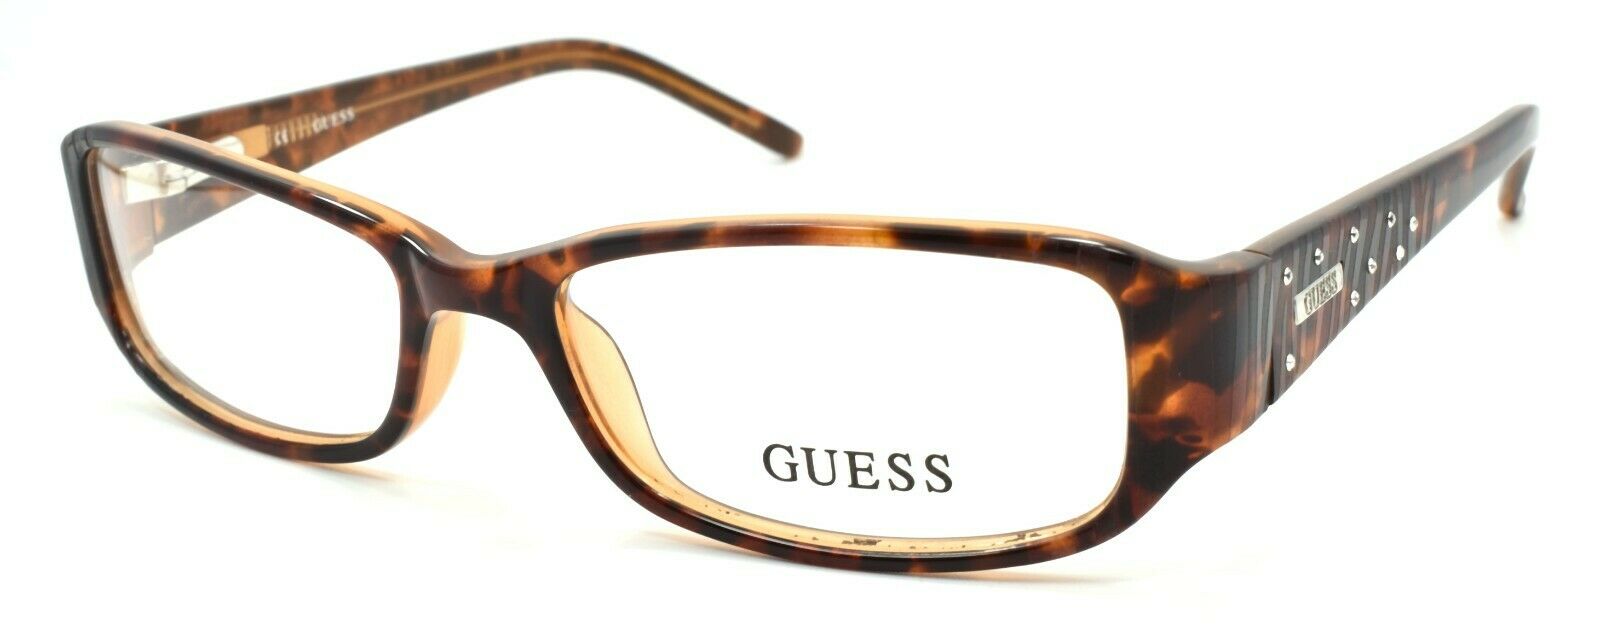 1-GUESS GU1564 TO Women's Eyeglasses Frames 52-16-135 Tortoise w/ Crystals + CASE-715583136991-IKSpecs